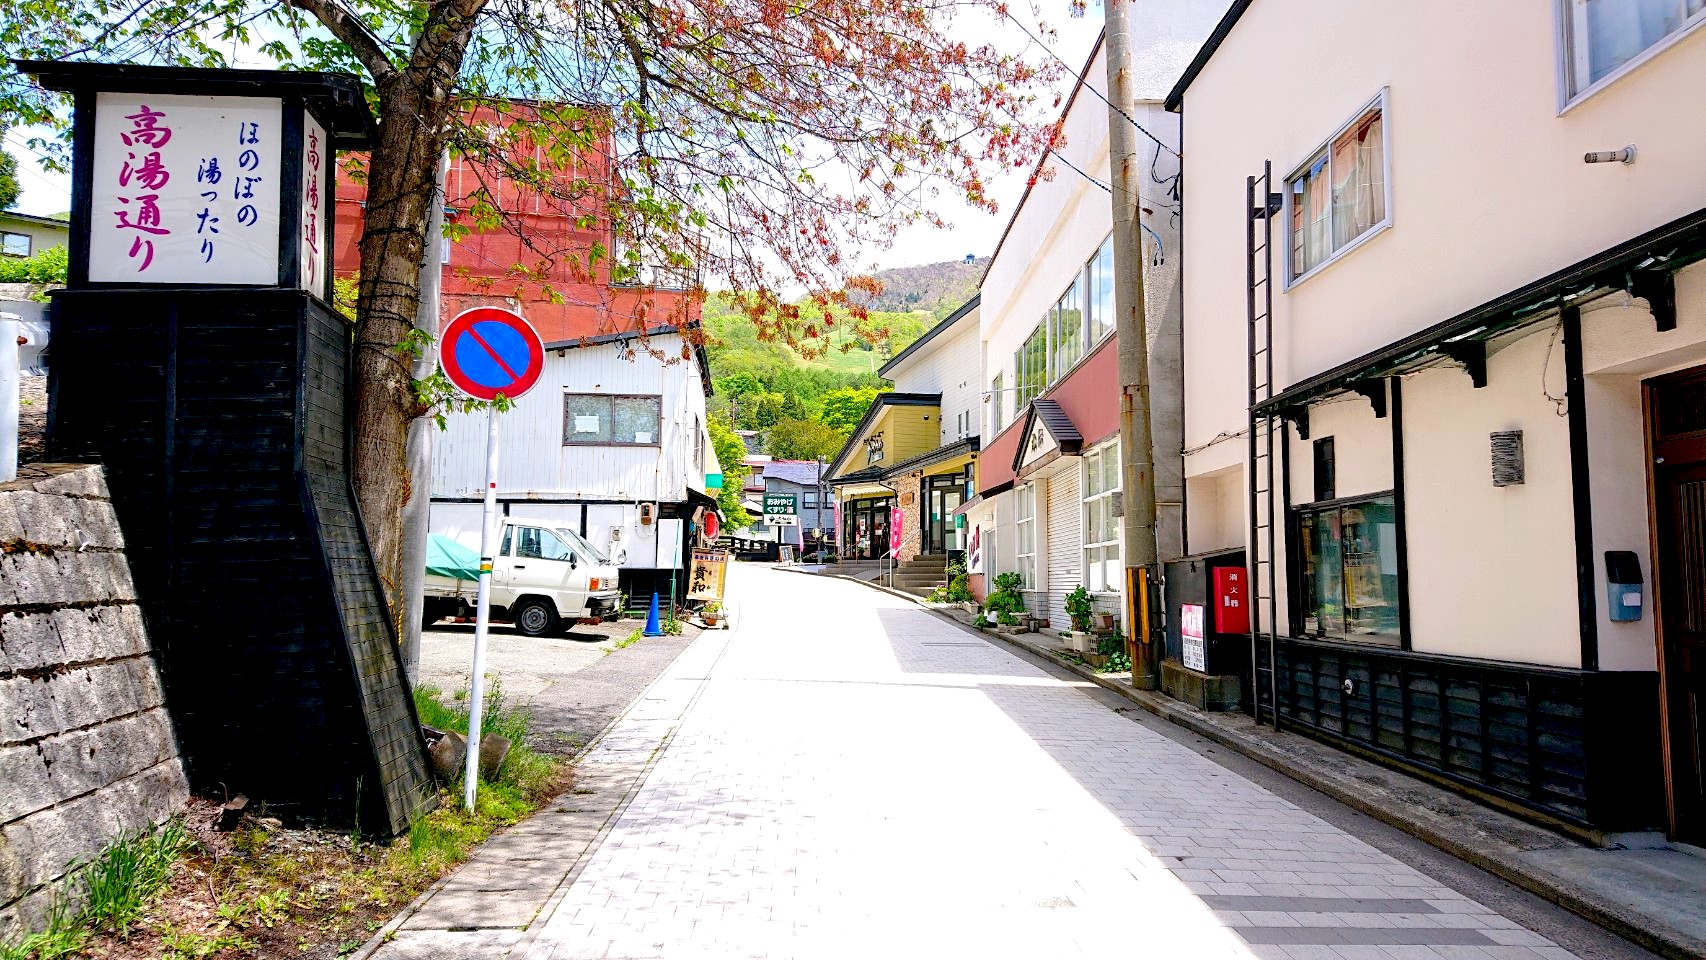 Takayu-dori street